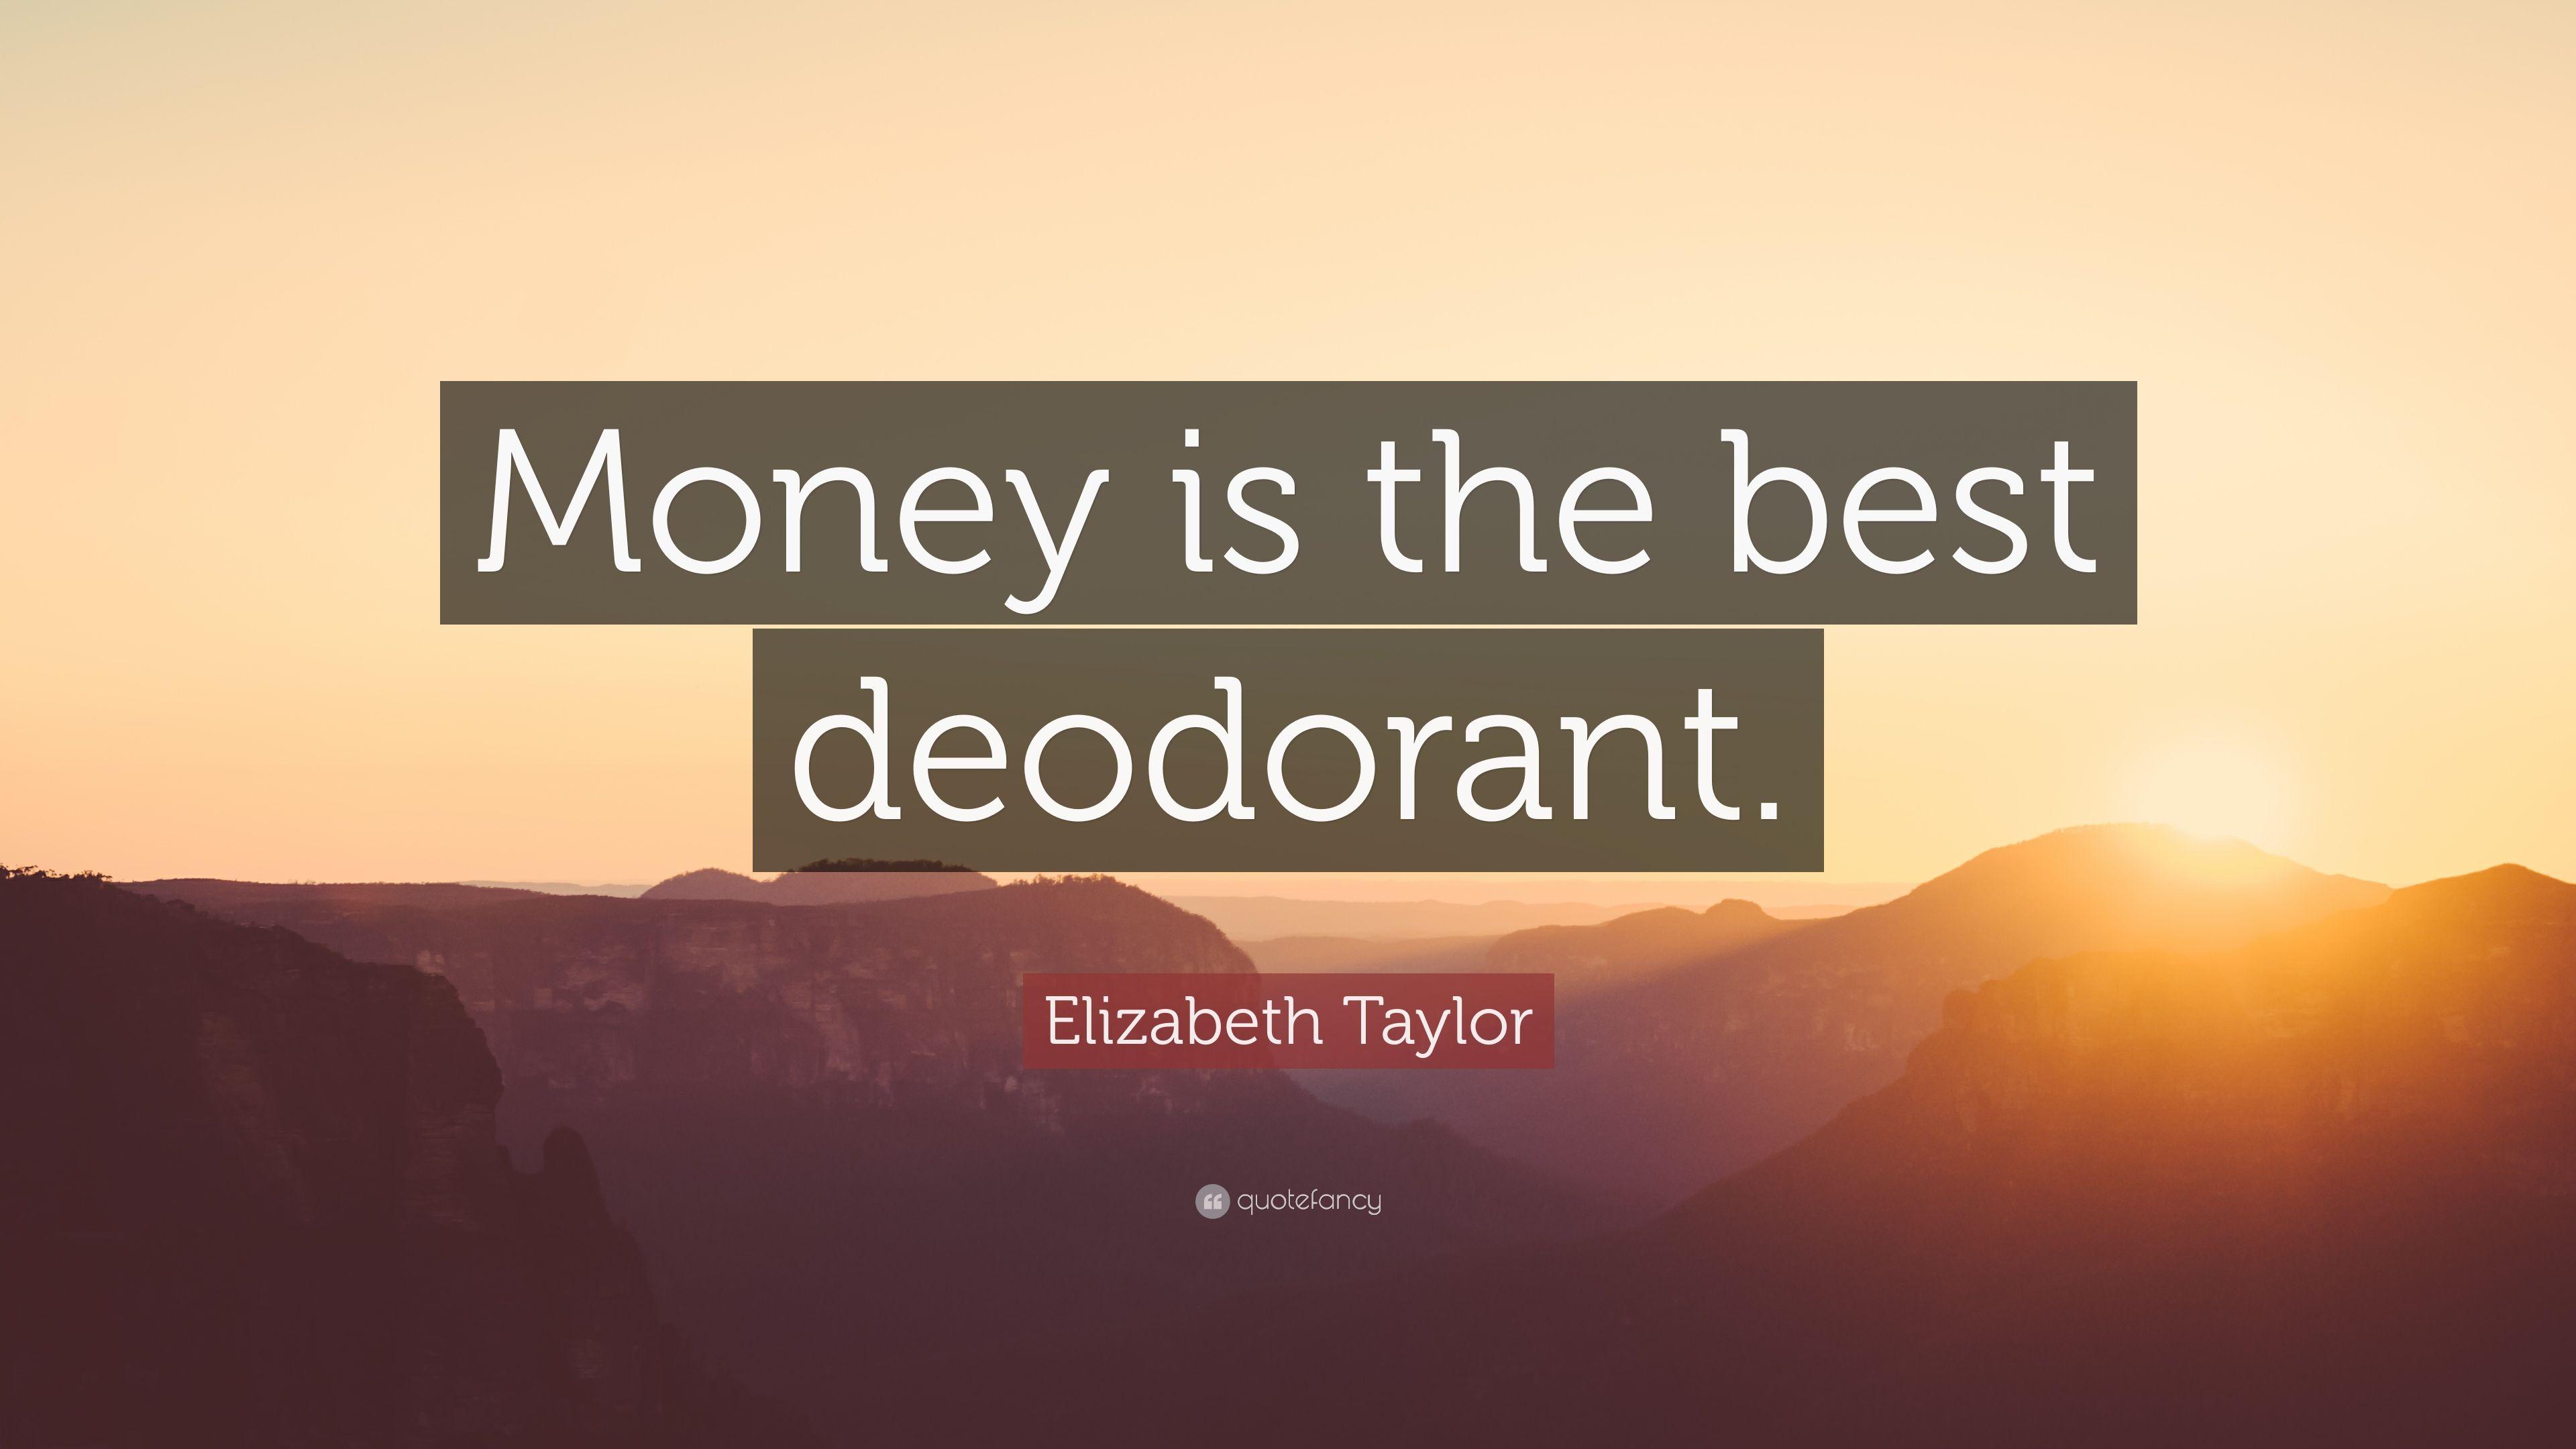 Elizabeth Taylor Quote: “Money is the best deodorant.” 9 wallpaper